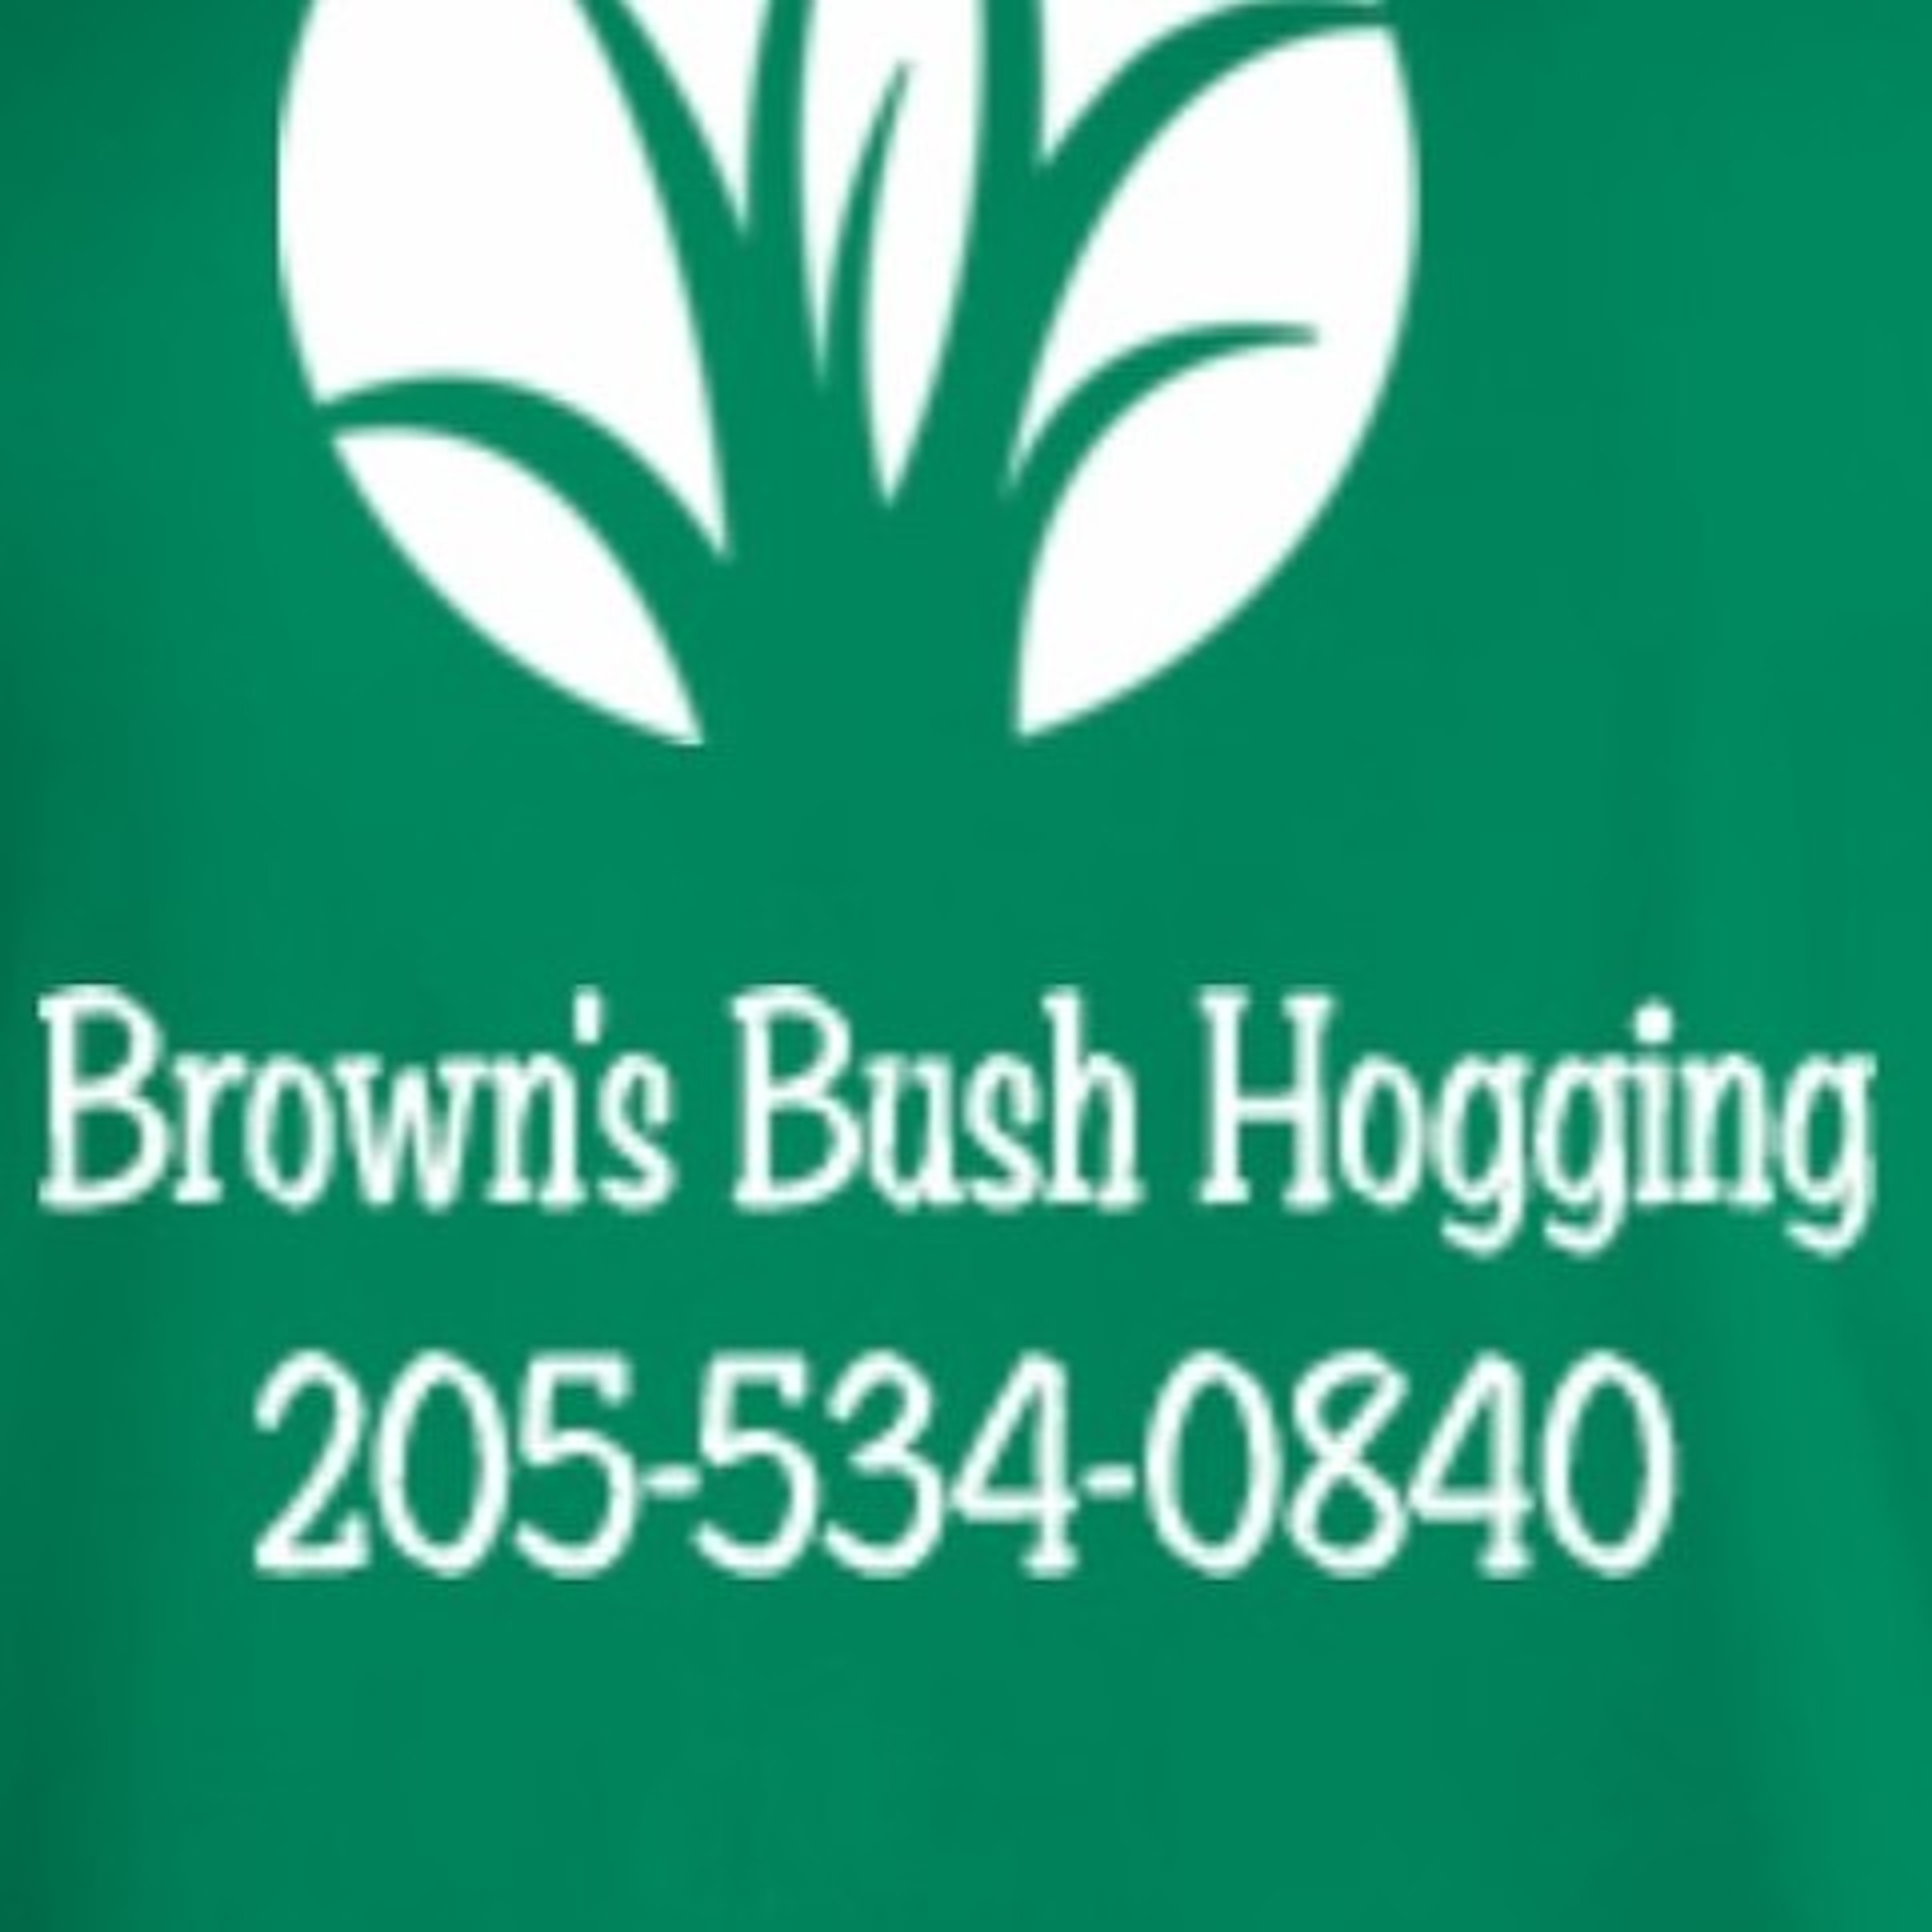 Browns bush hogging &lawn service